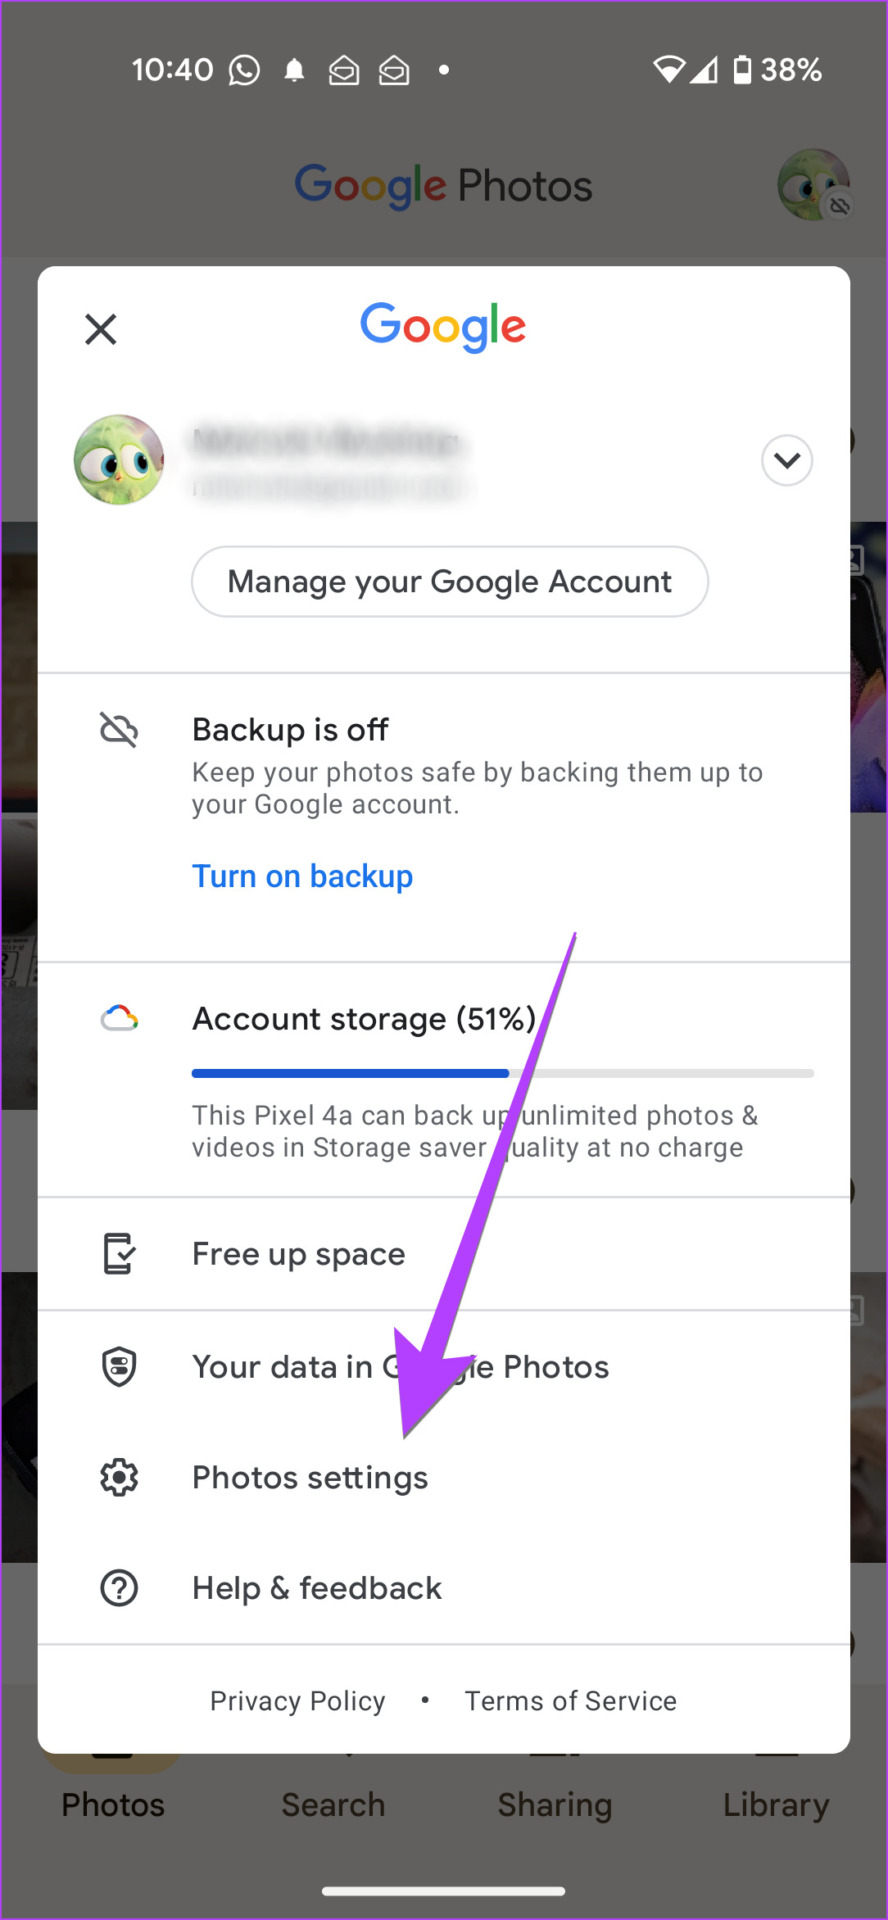 How do I enable photos upload to Google Photos?